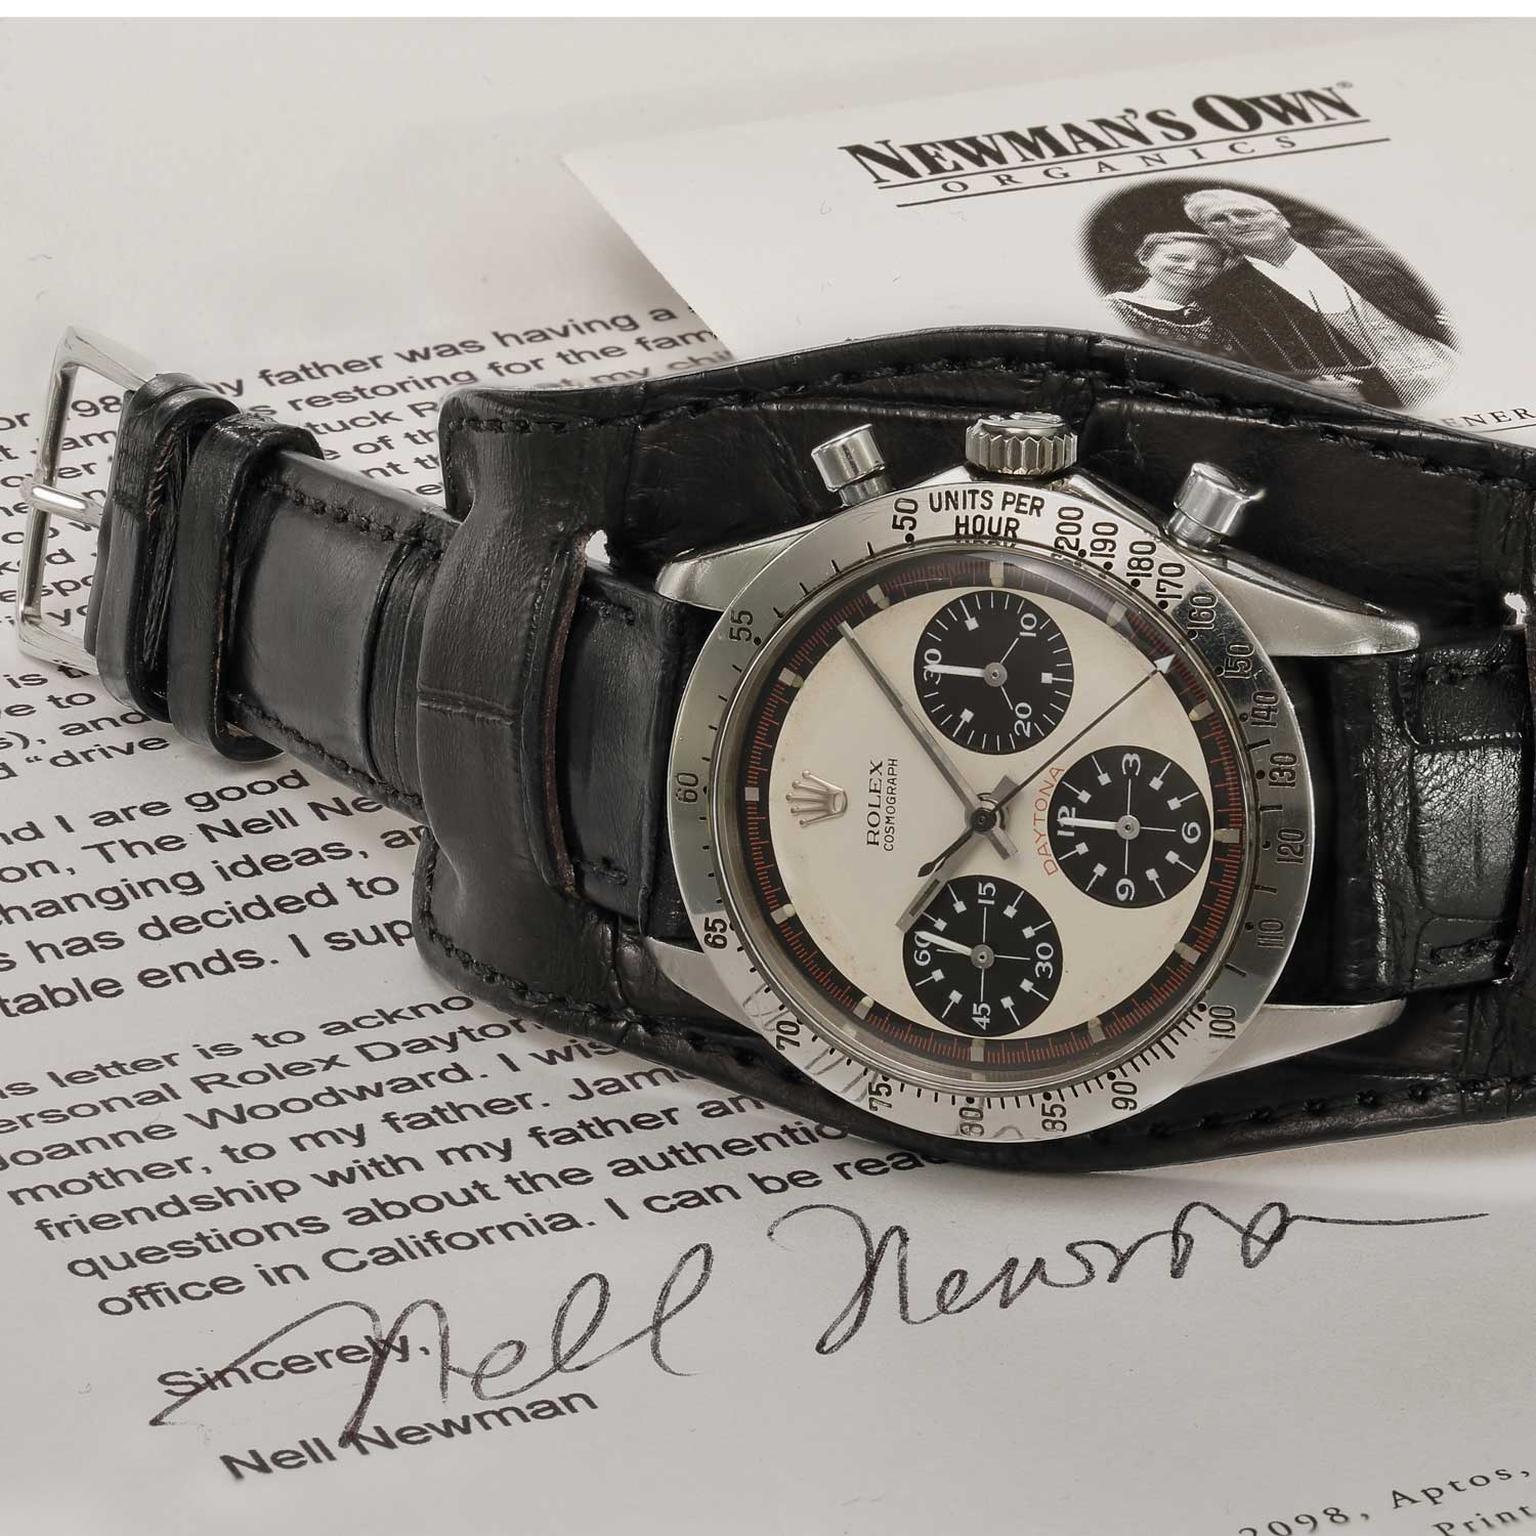 Paul Newman Rolex Daytona watch authenticity